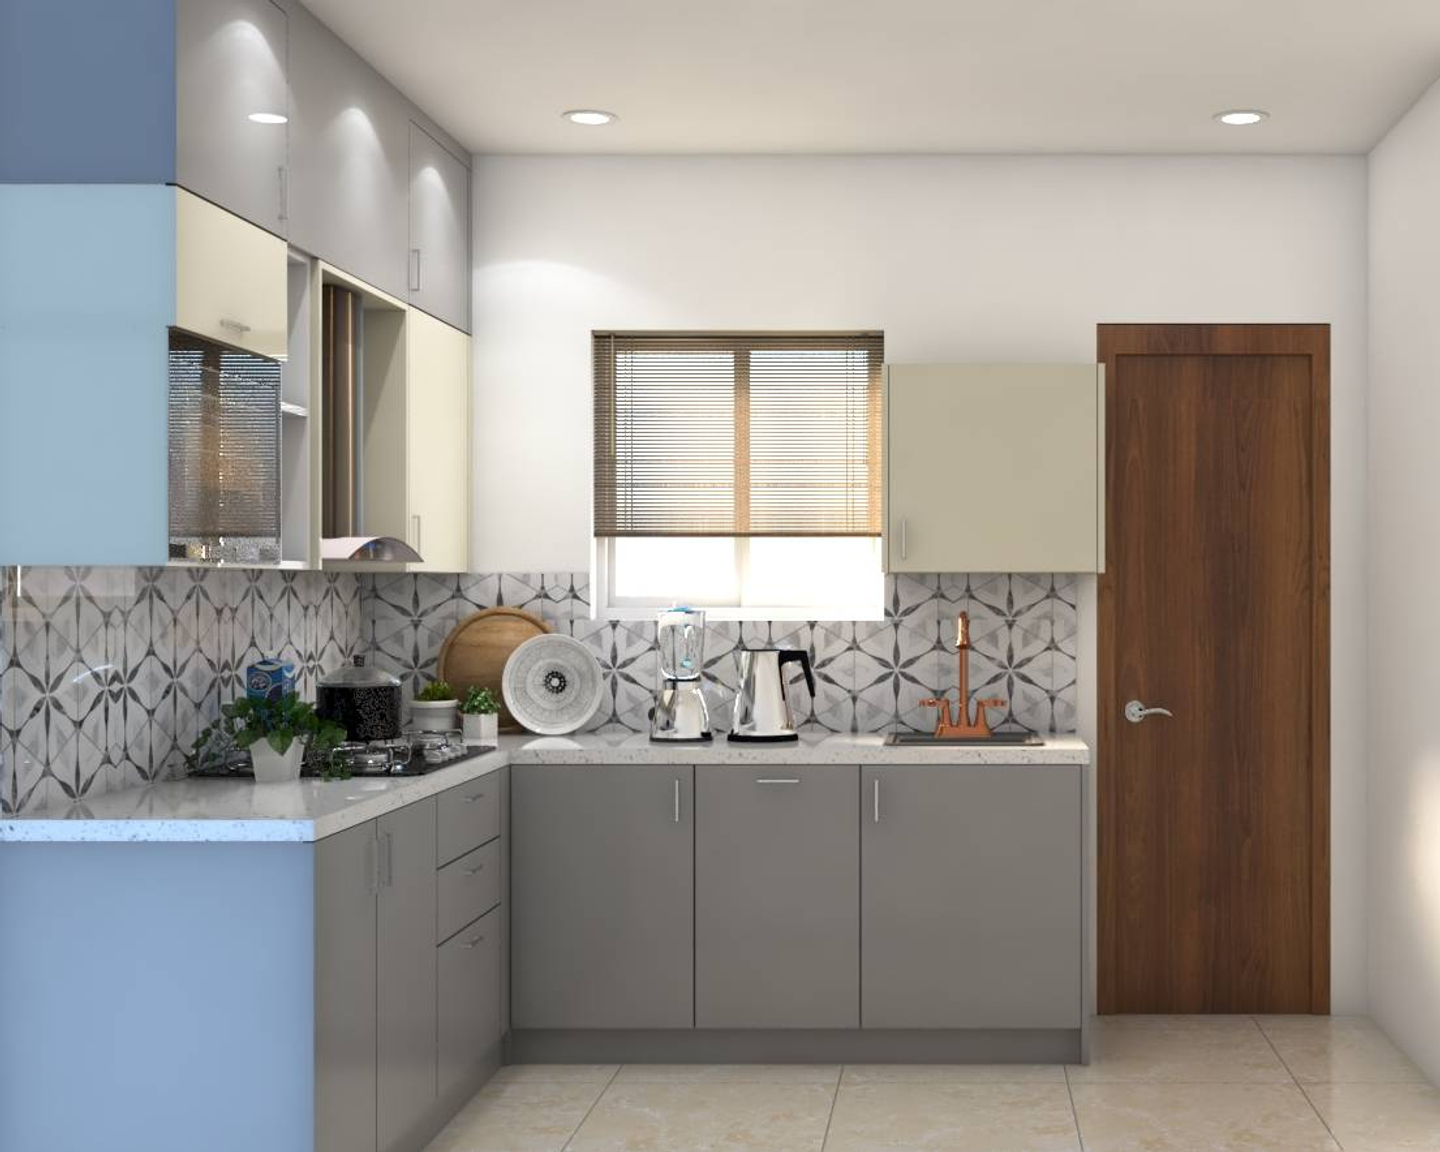 Modular Kitchen Design Ideas - Livspace